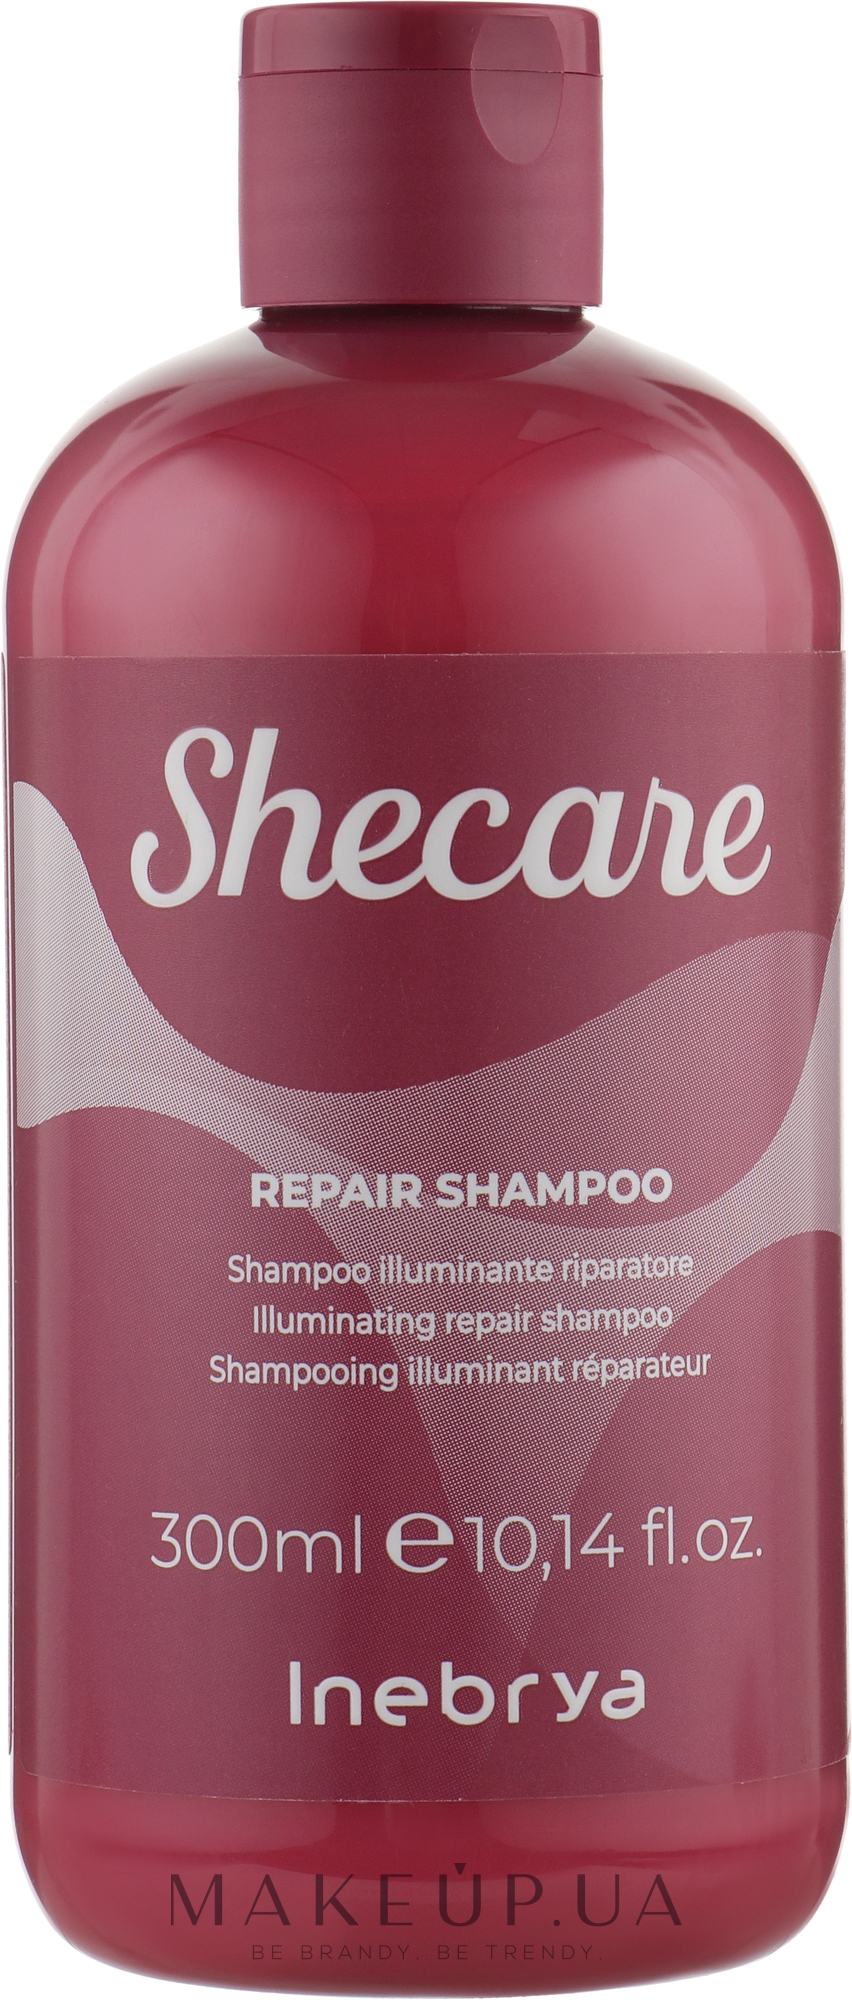 Восстанавливающий шампунь для волос - Inebrya She Care Repair Shampoo  — фото 300ml